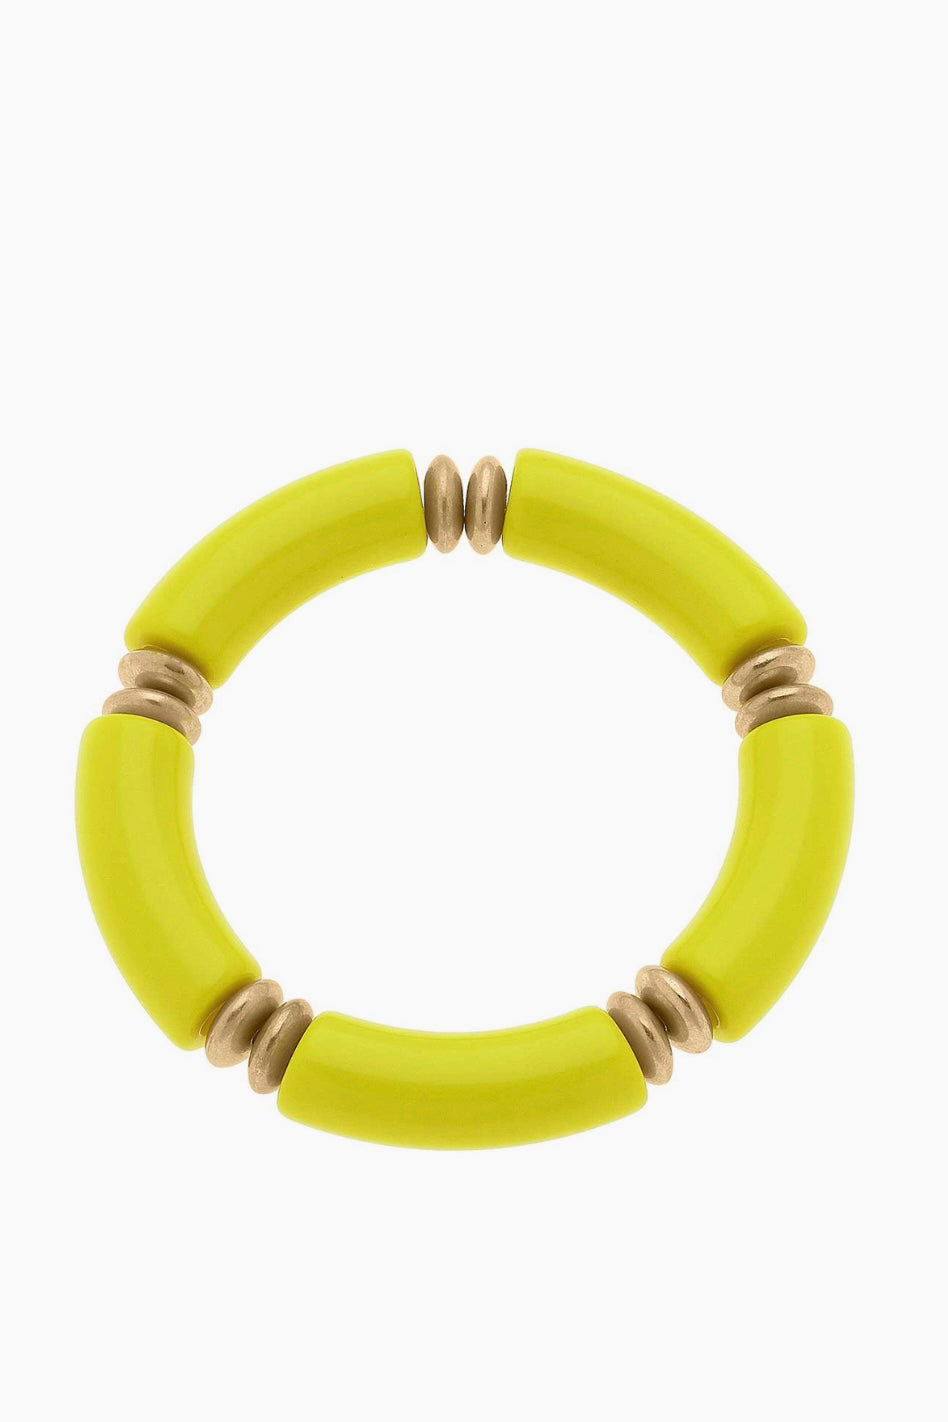 Lemon Yellow Resin Stretch Bracelet Jewelry available at Southern Sunday